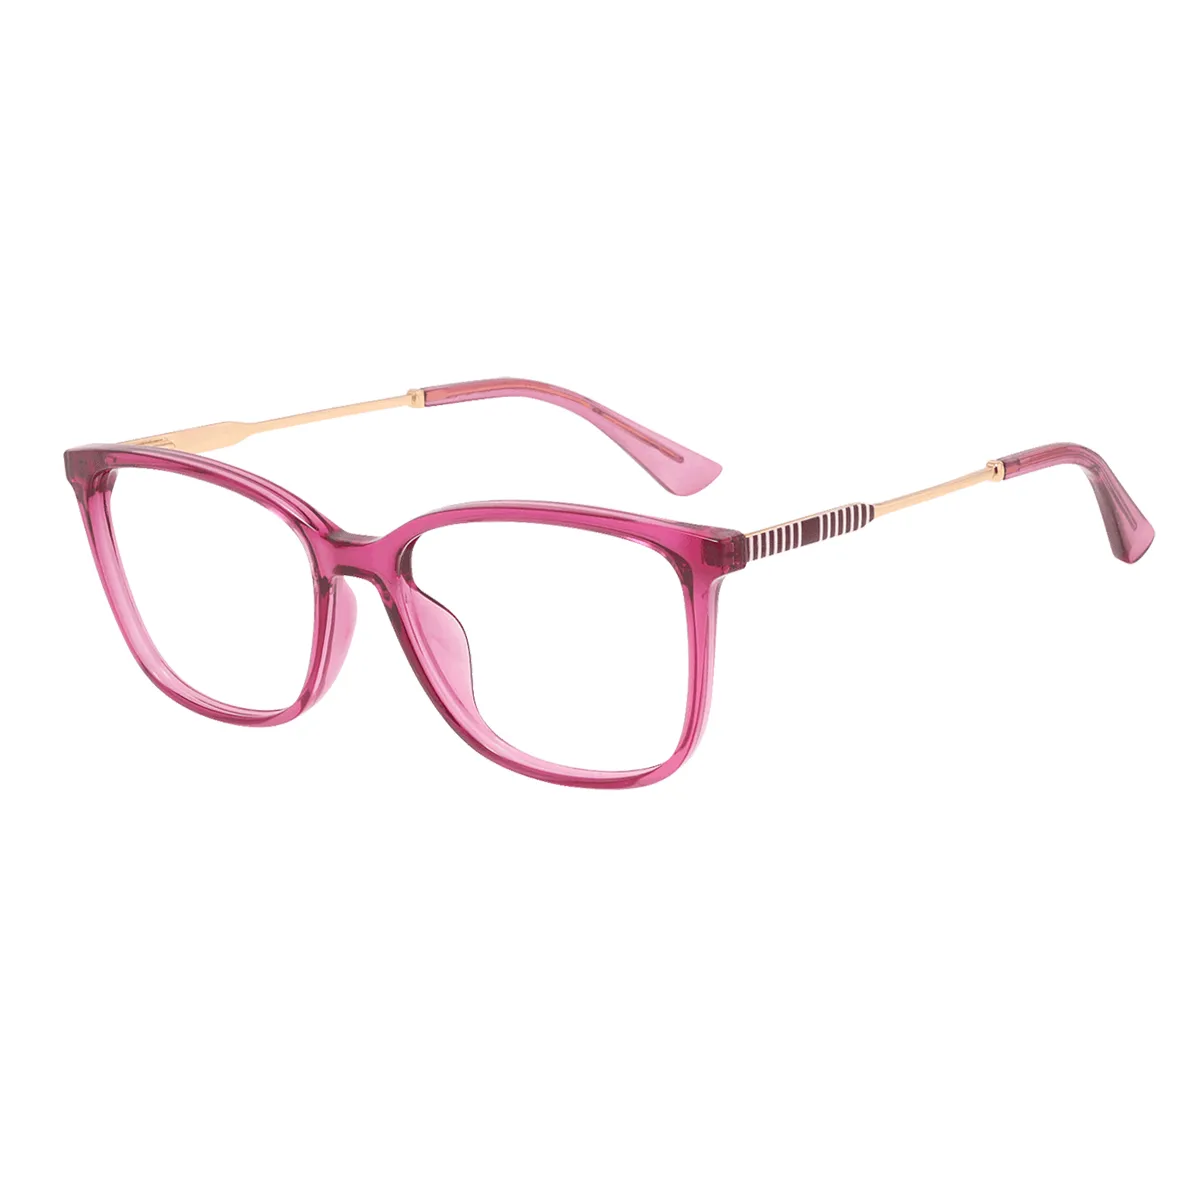 Huber - Square Purple Glasses for Women